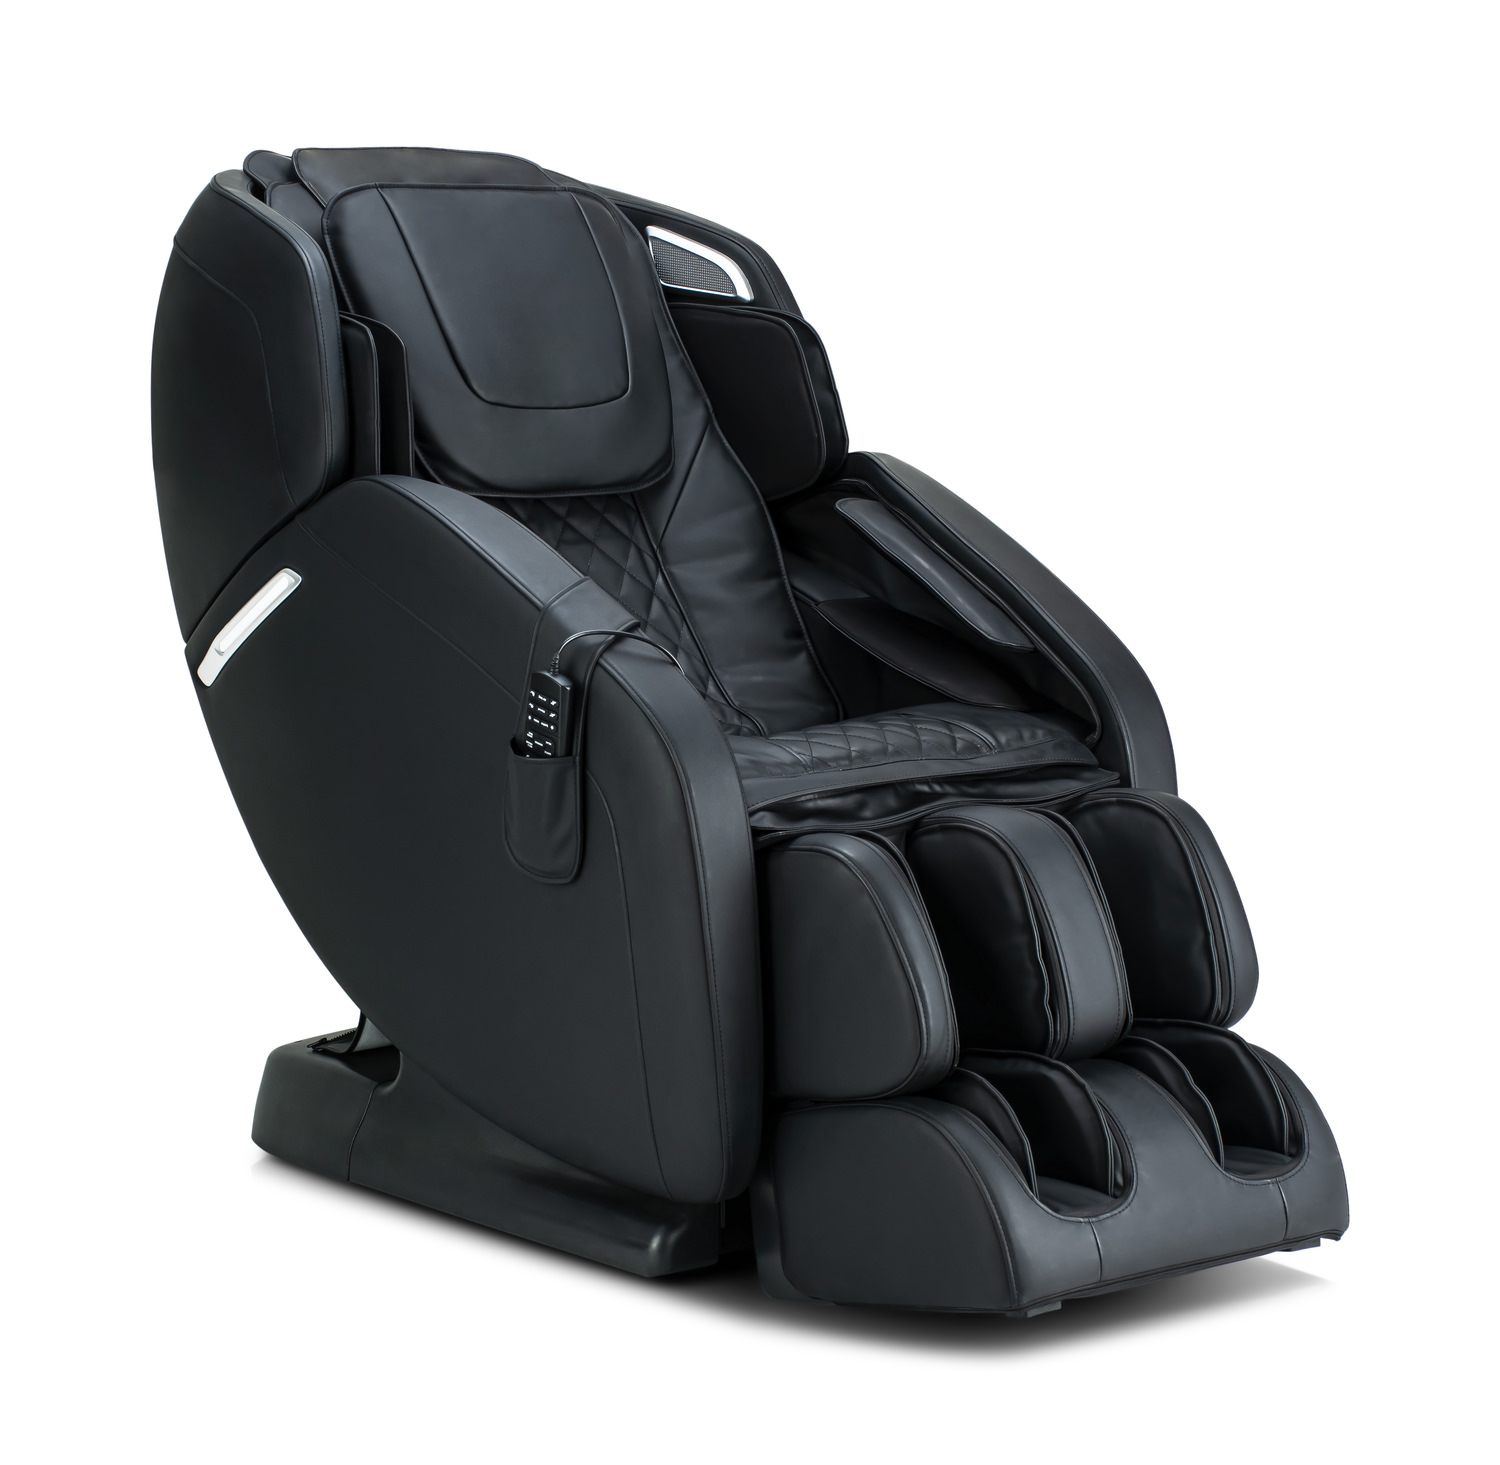 Massage Chair & Recliner Accessories